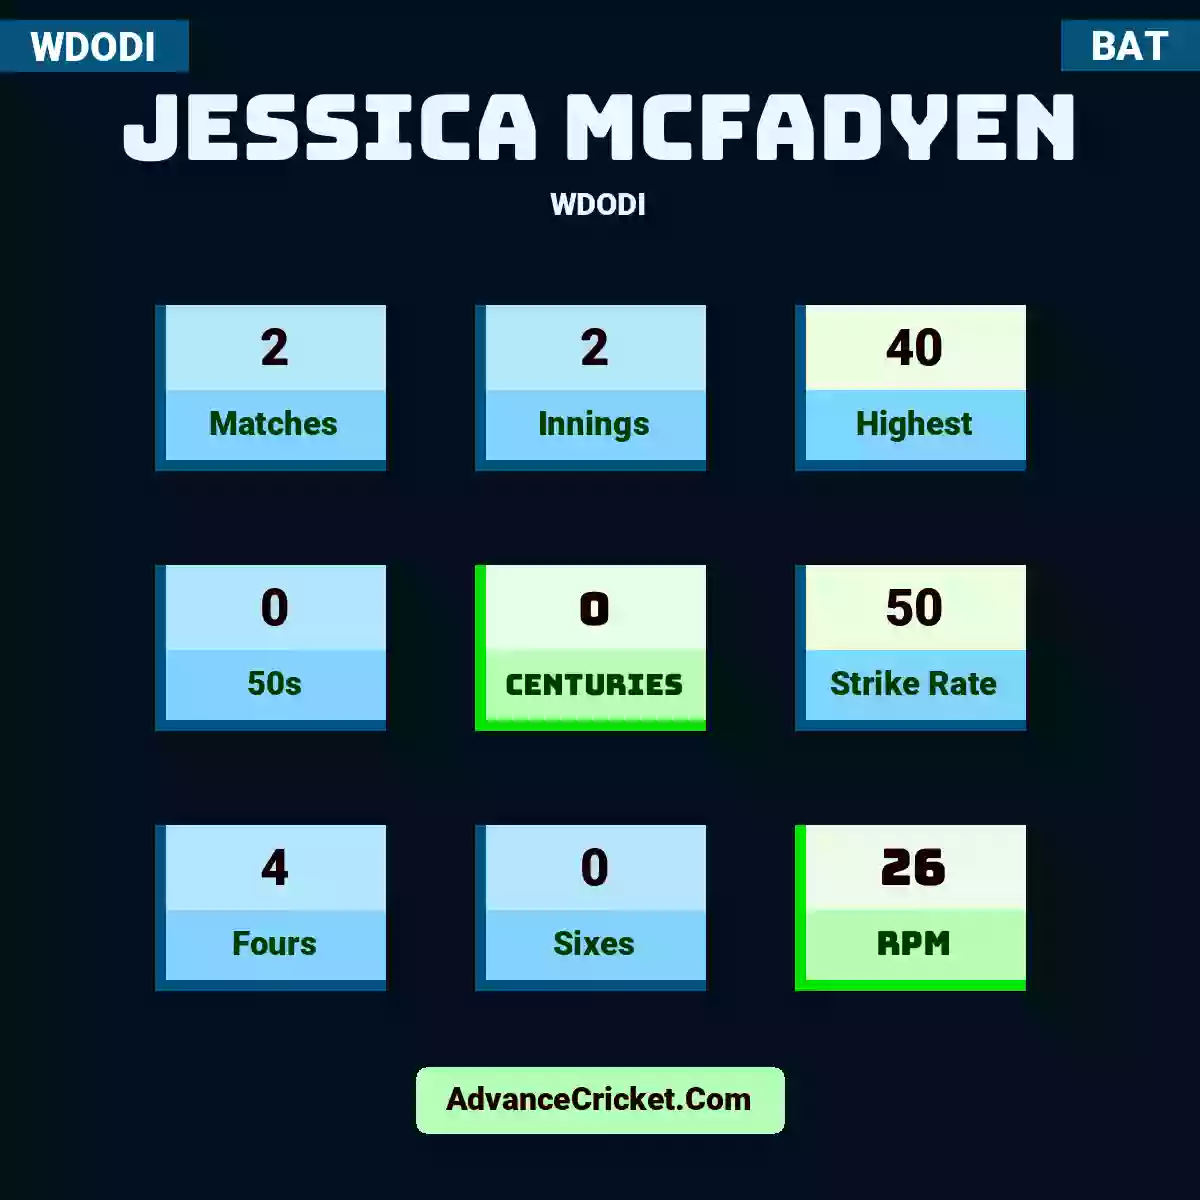 Jessica McFadyen WDODI , Jessica McFadyen played 2 matches, scored 40 runs as highest, 0 half-centuries, and 0 centuries, with a strike rate of 50. J.McFadyen hit 4 fours and 0 sixes, with an RPM of 26.